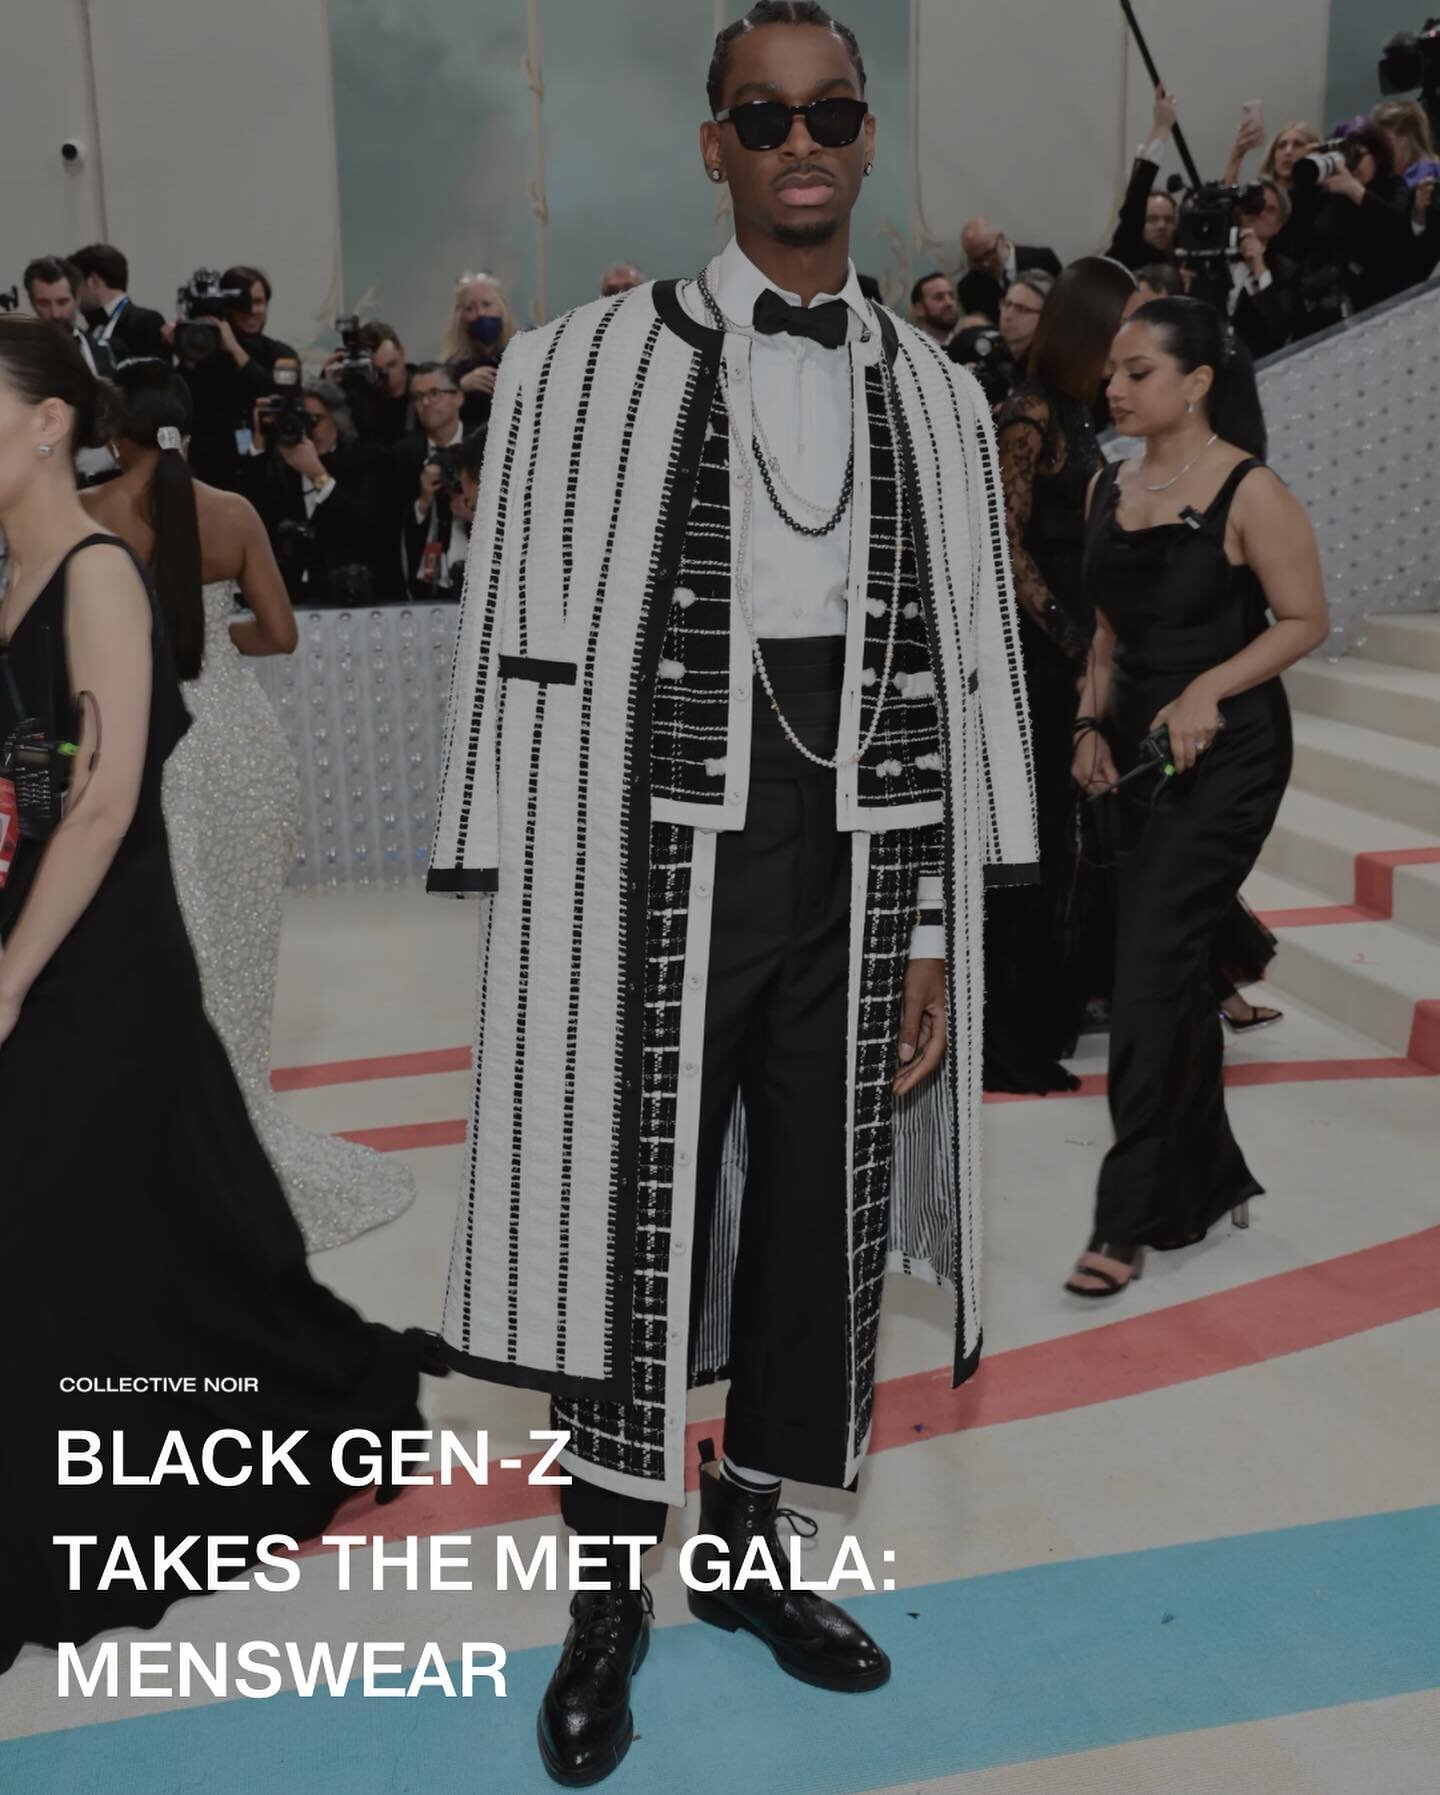 Black Gen Z men arrived at the #MetGala, bringing the 🔥 and breaking fashion barriers. 

📸: Getty Images 

#MetGala2023 #BlackGenZ